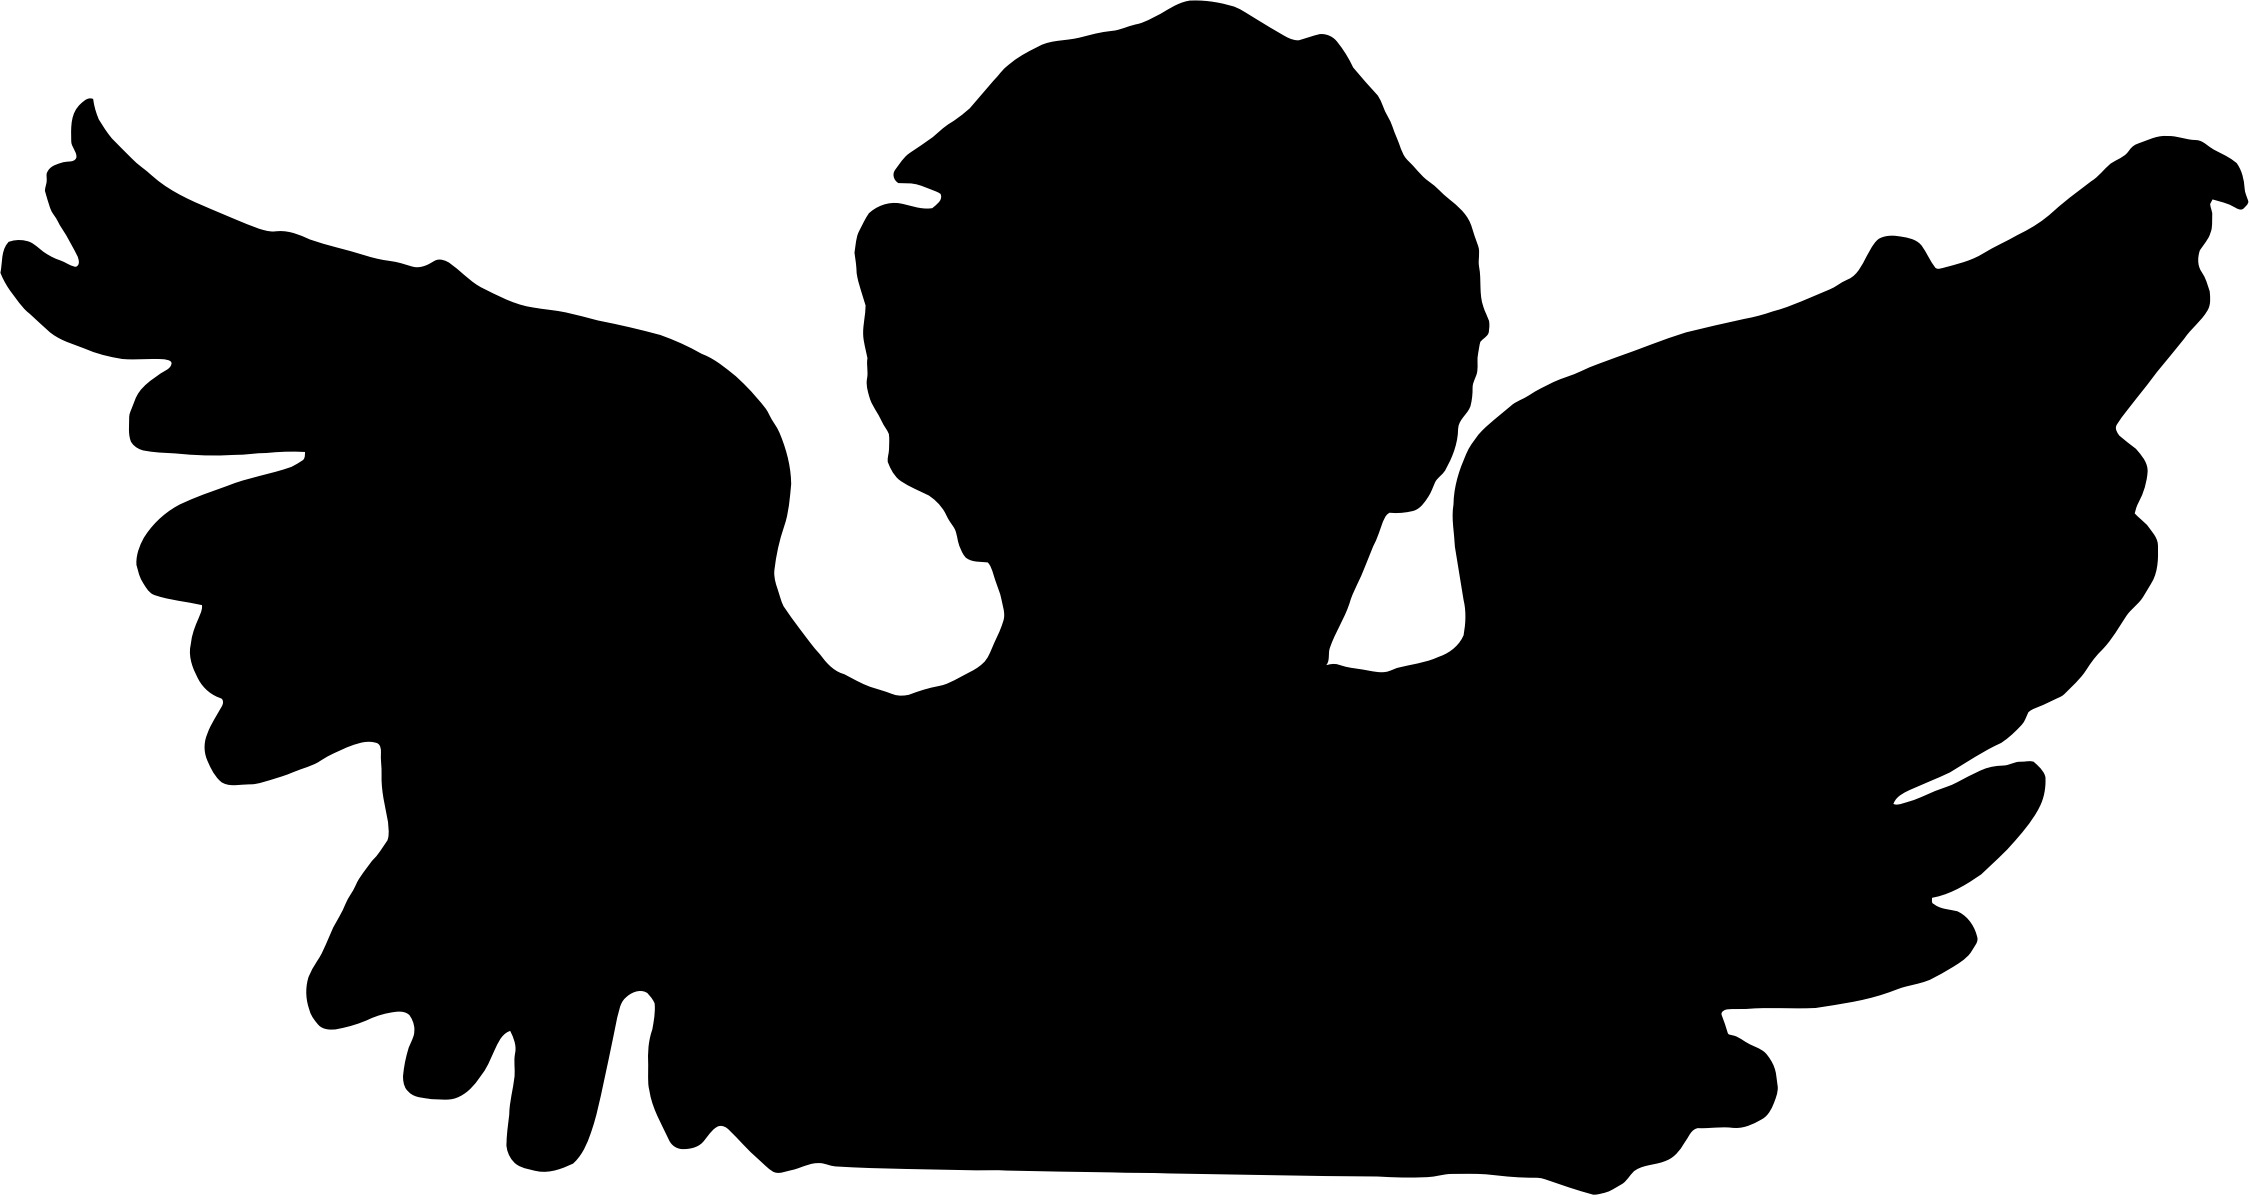 Cherub Silhouette - Cherub Silhouette (2249x1195)